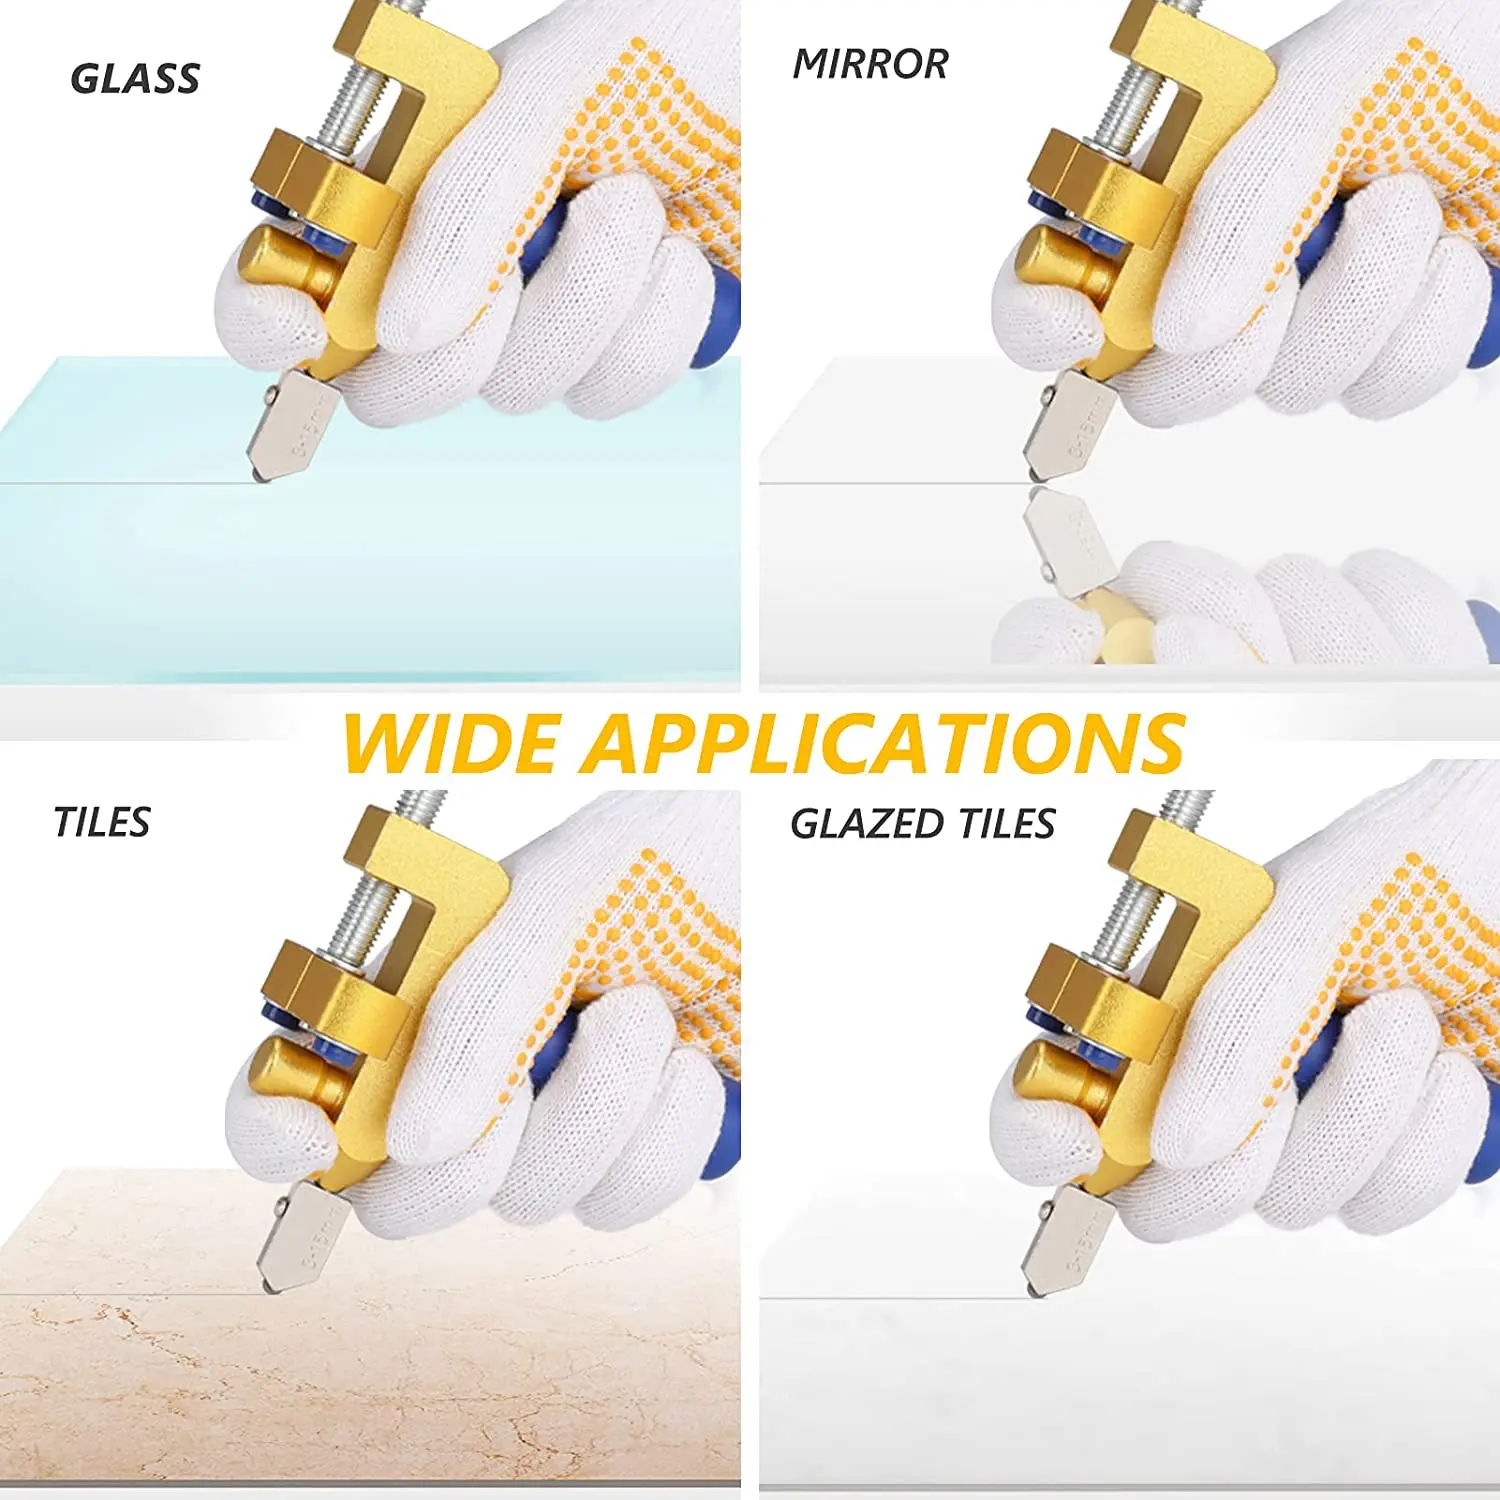 2 in1 Manual Tile Cutter Glass Ceramic Cutter for Cutting Glass Glazed Tiles